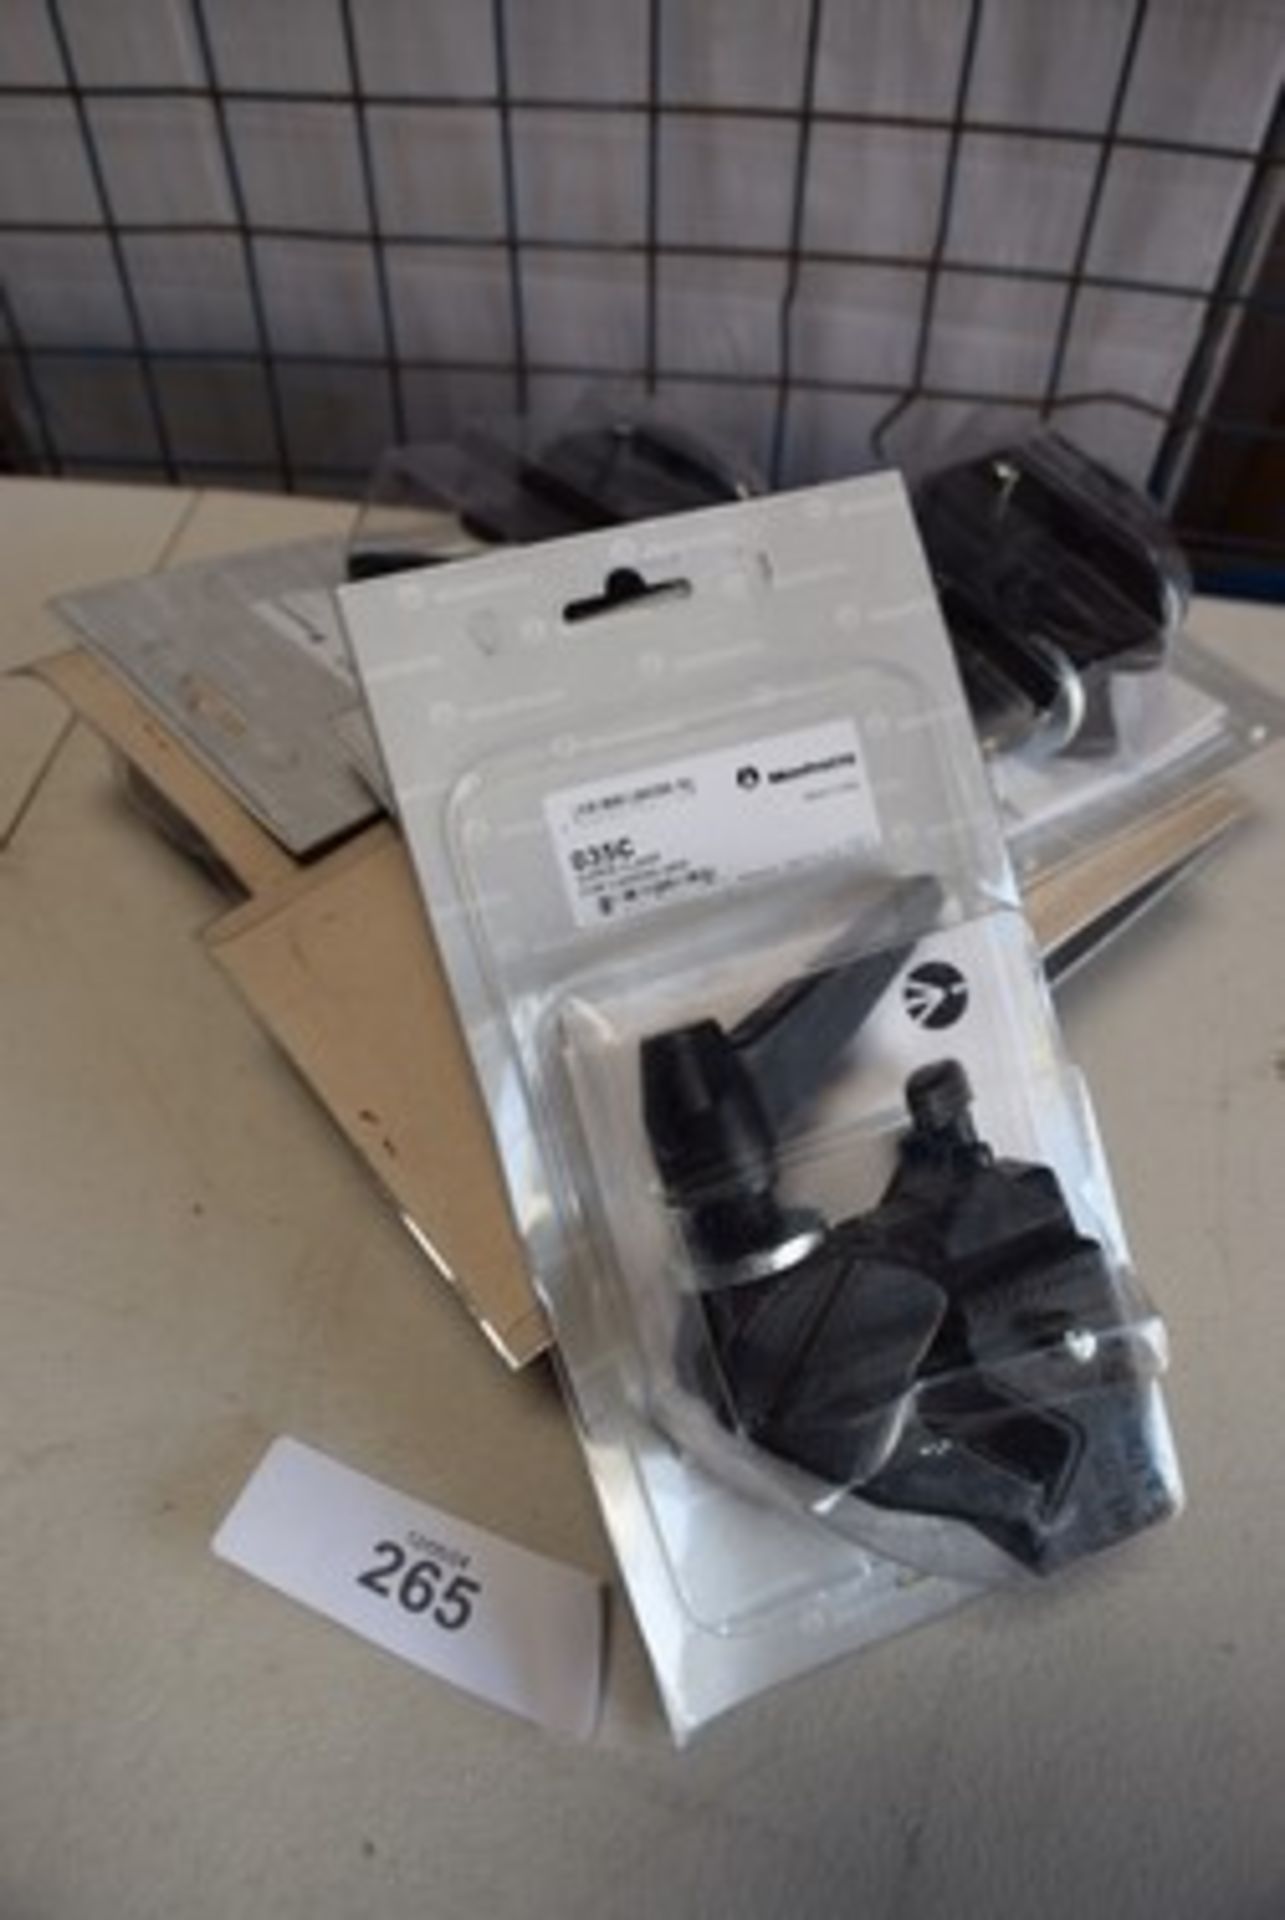 6 x Manfrotto Super clamps, item No: 035C - new (TS)